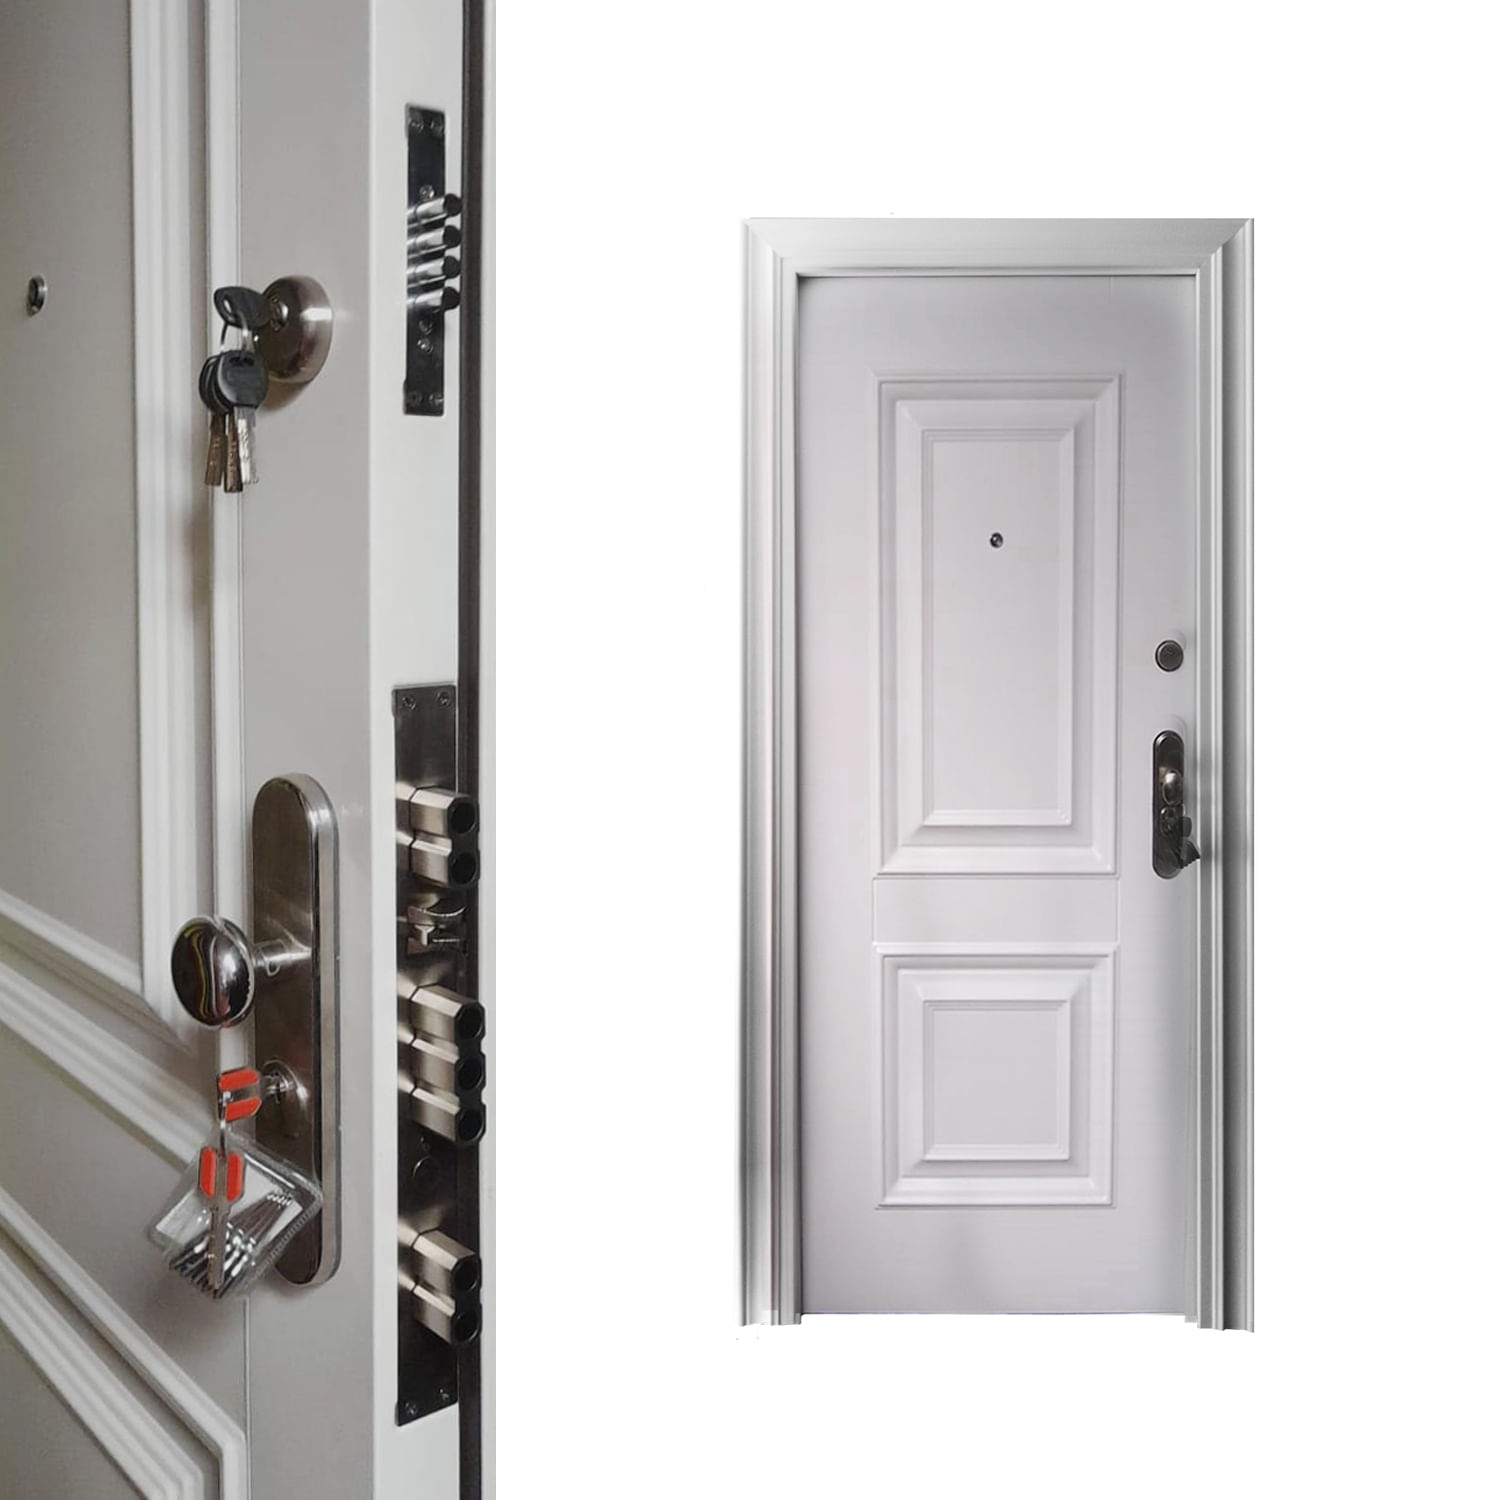 Puerta de Acero de Seguridad Rino Doors Modelo Sapa Light Color blanco 89cm x 209cm con Apertura L